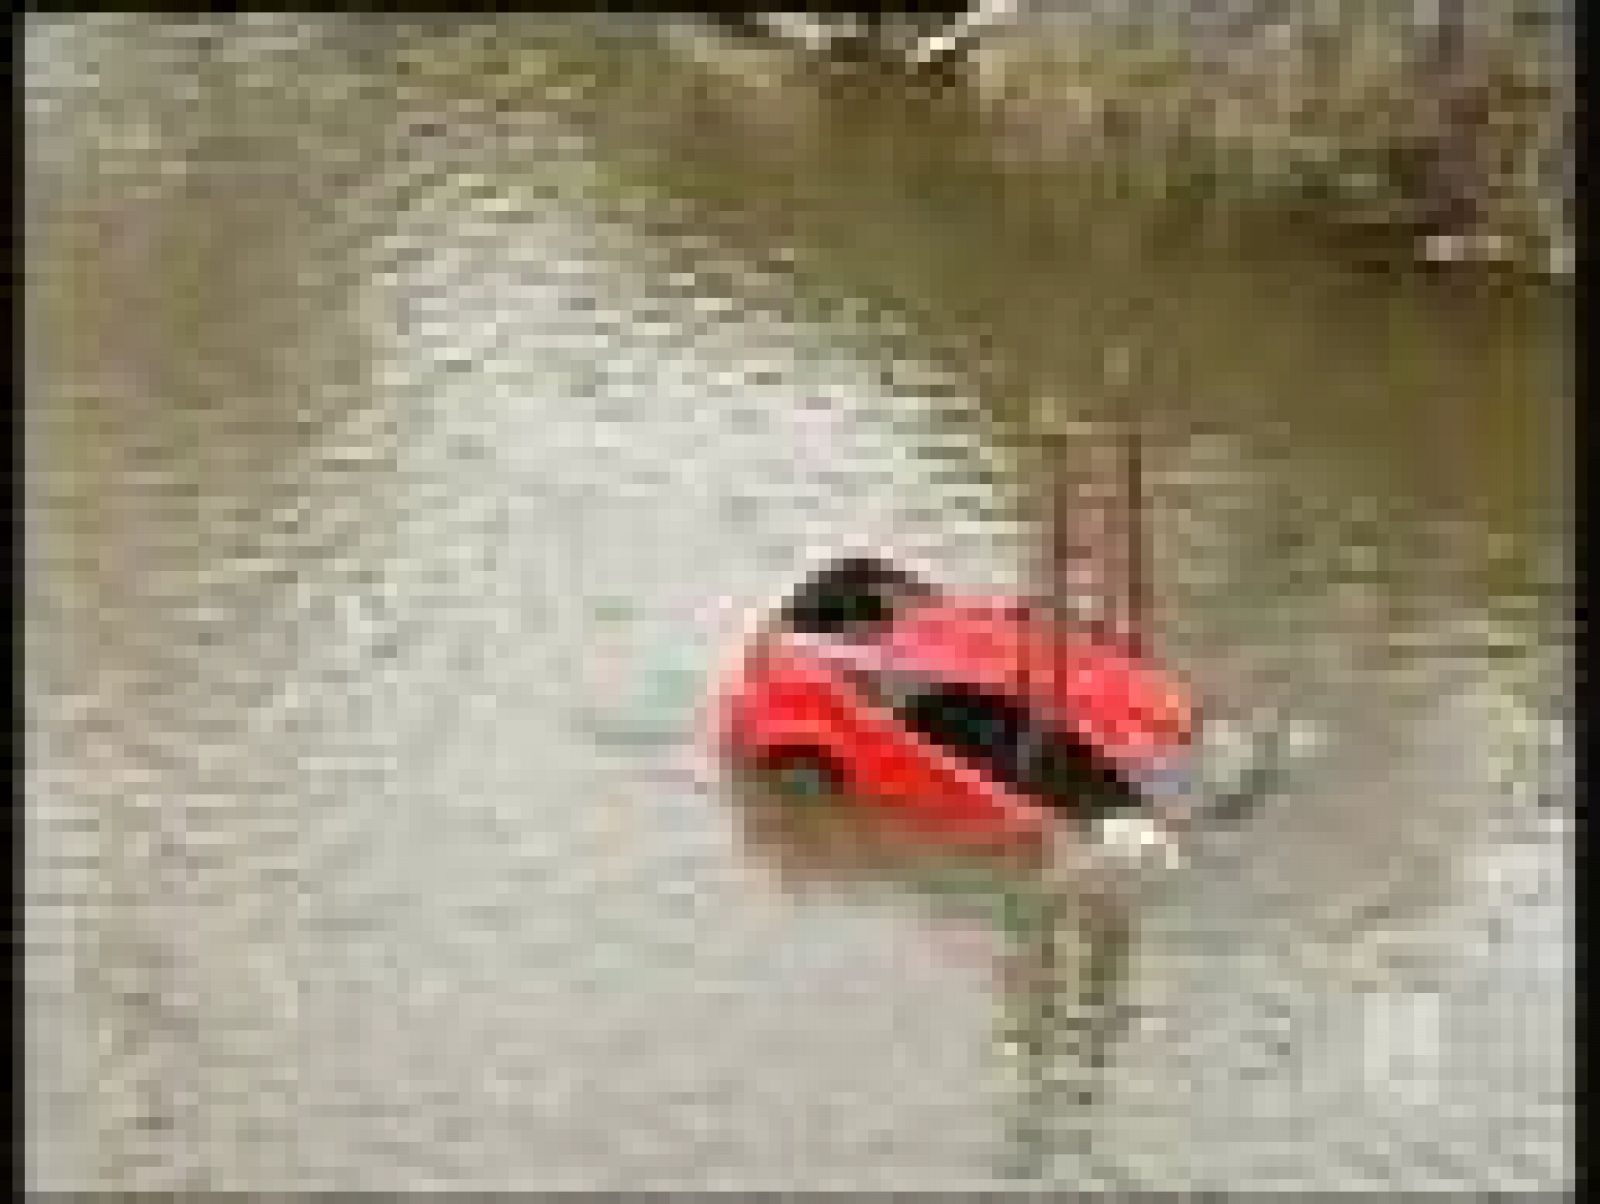 Un vehículo se precipita al río Duero en Zamora | RTVE Play